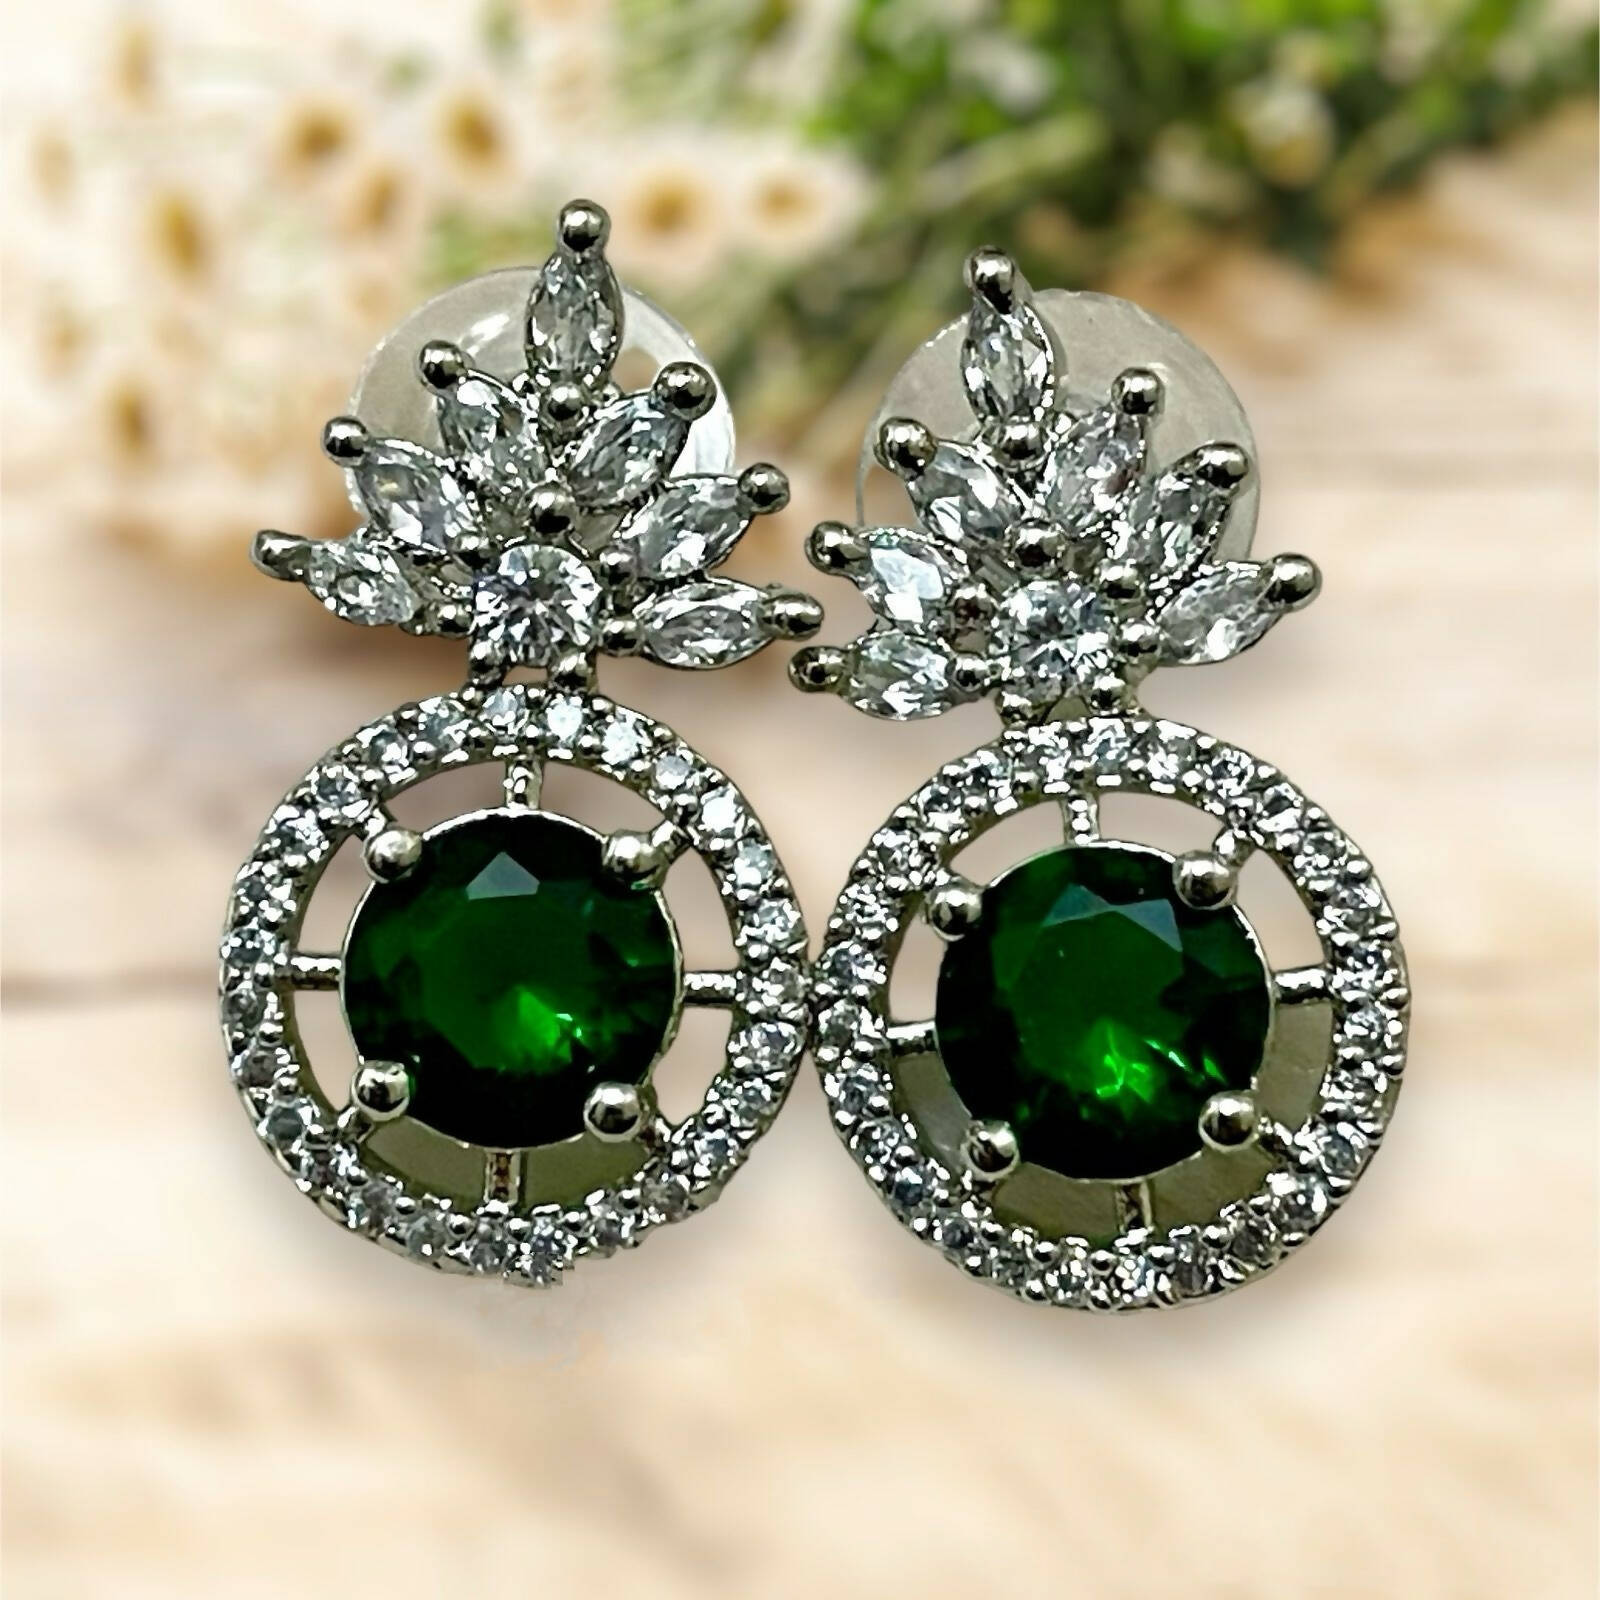 Pretty in Green with Swarovski Crystal Earrings | Kira Shaner | Flickr